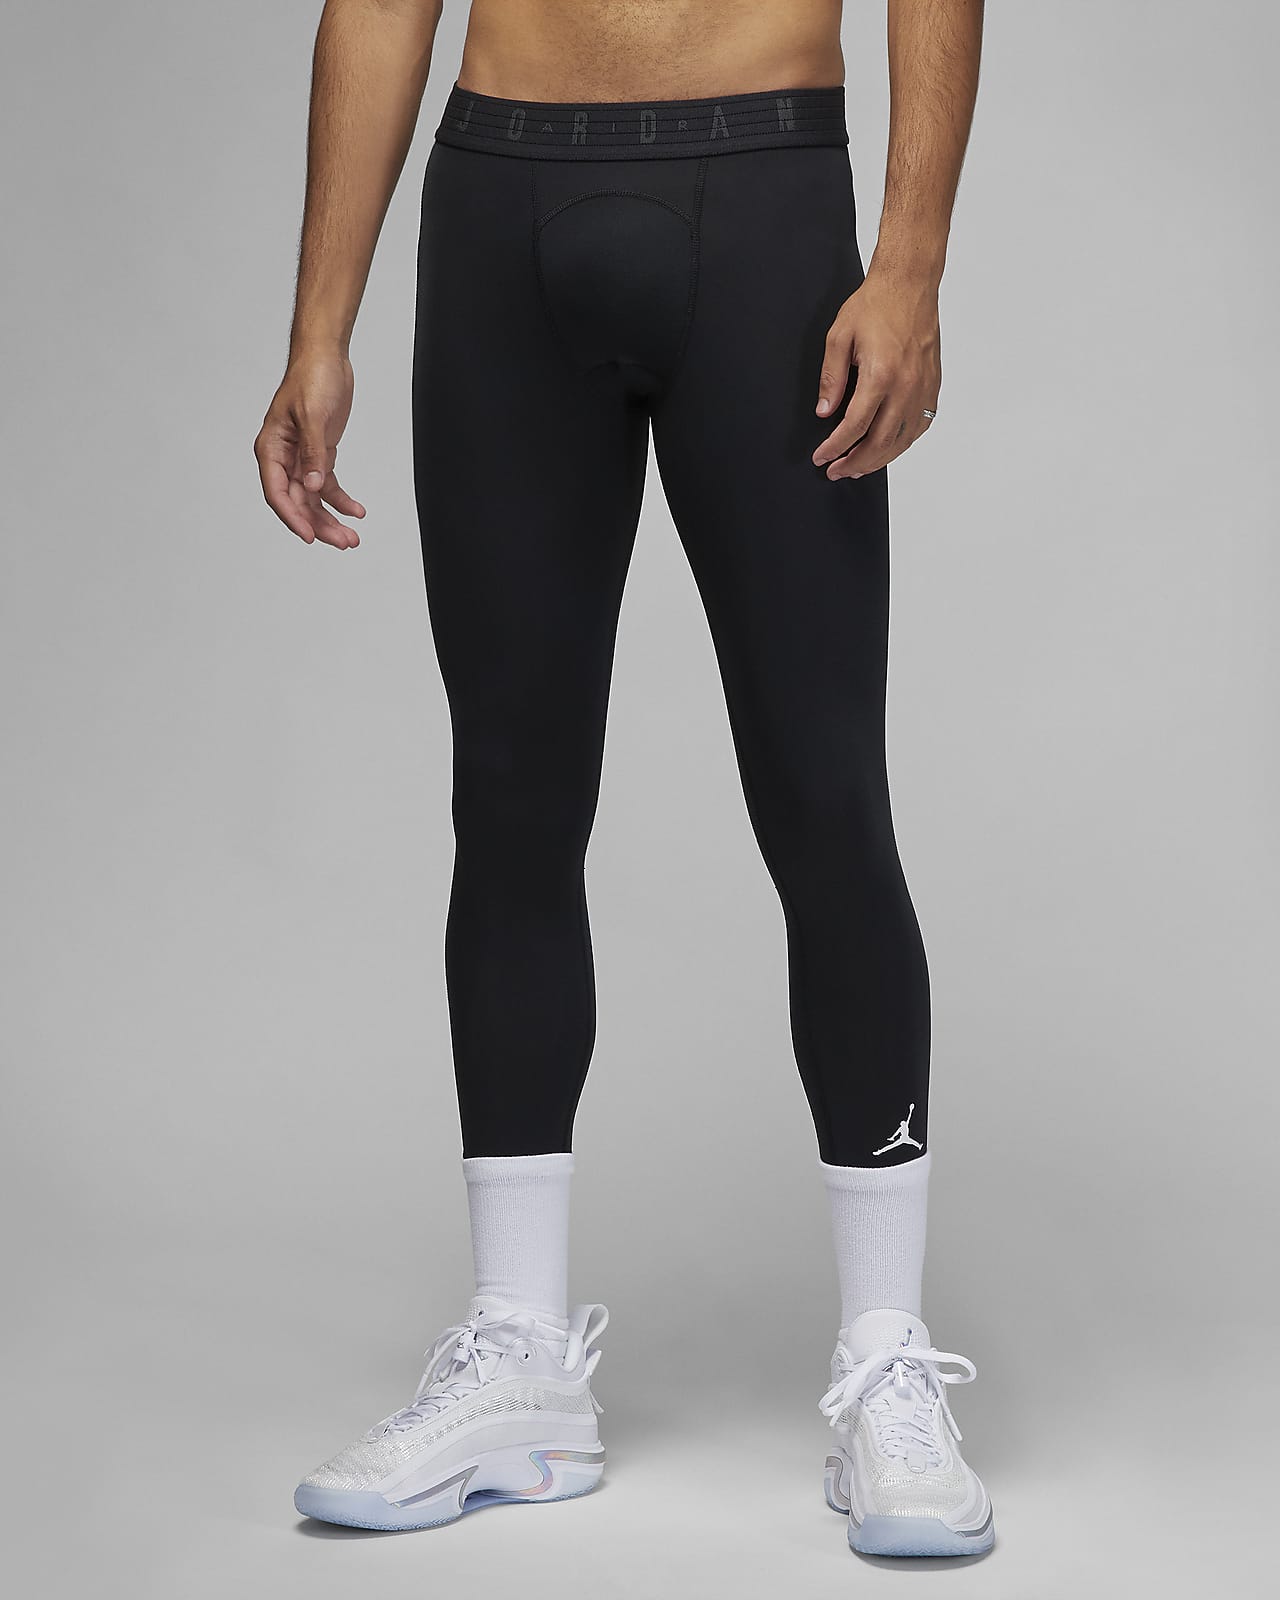 Leggings & Tights. Nike UK